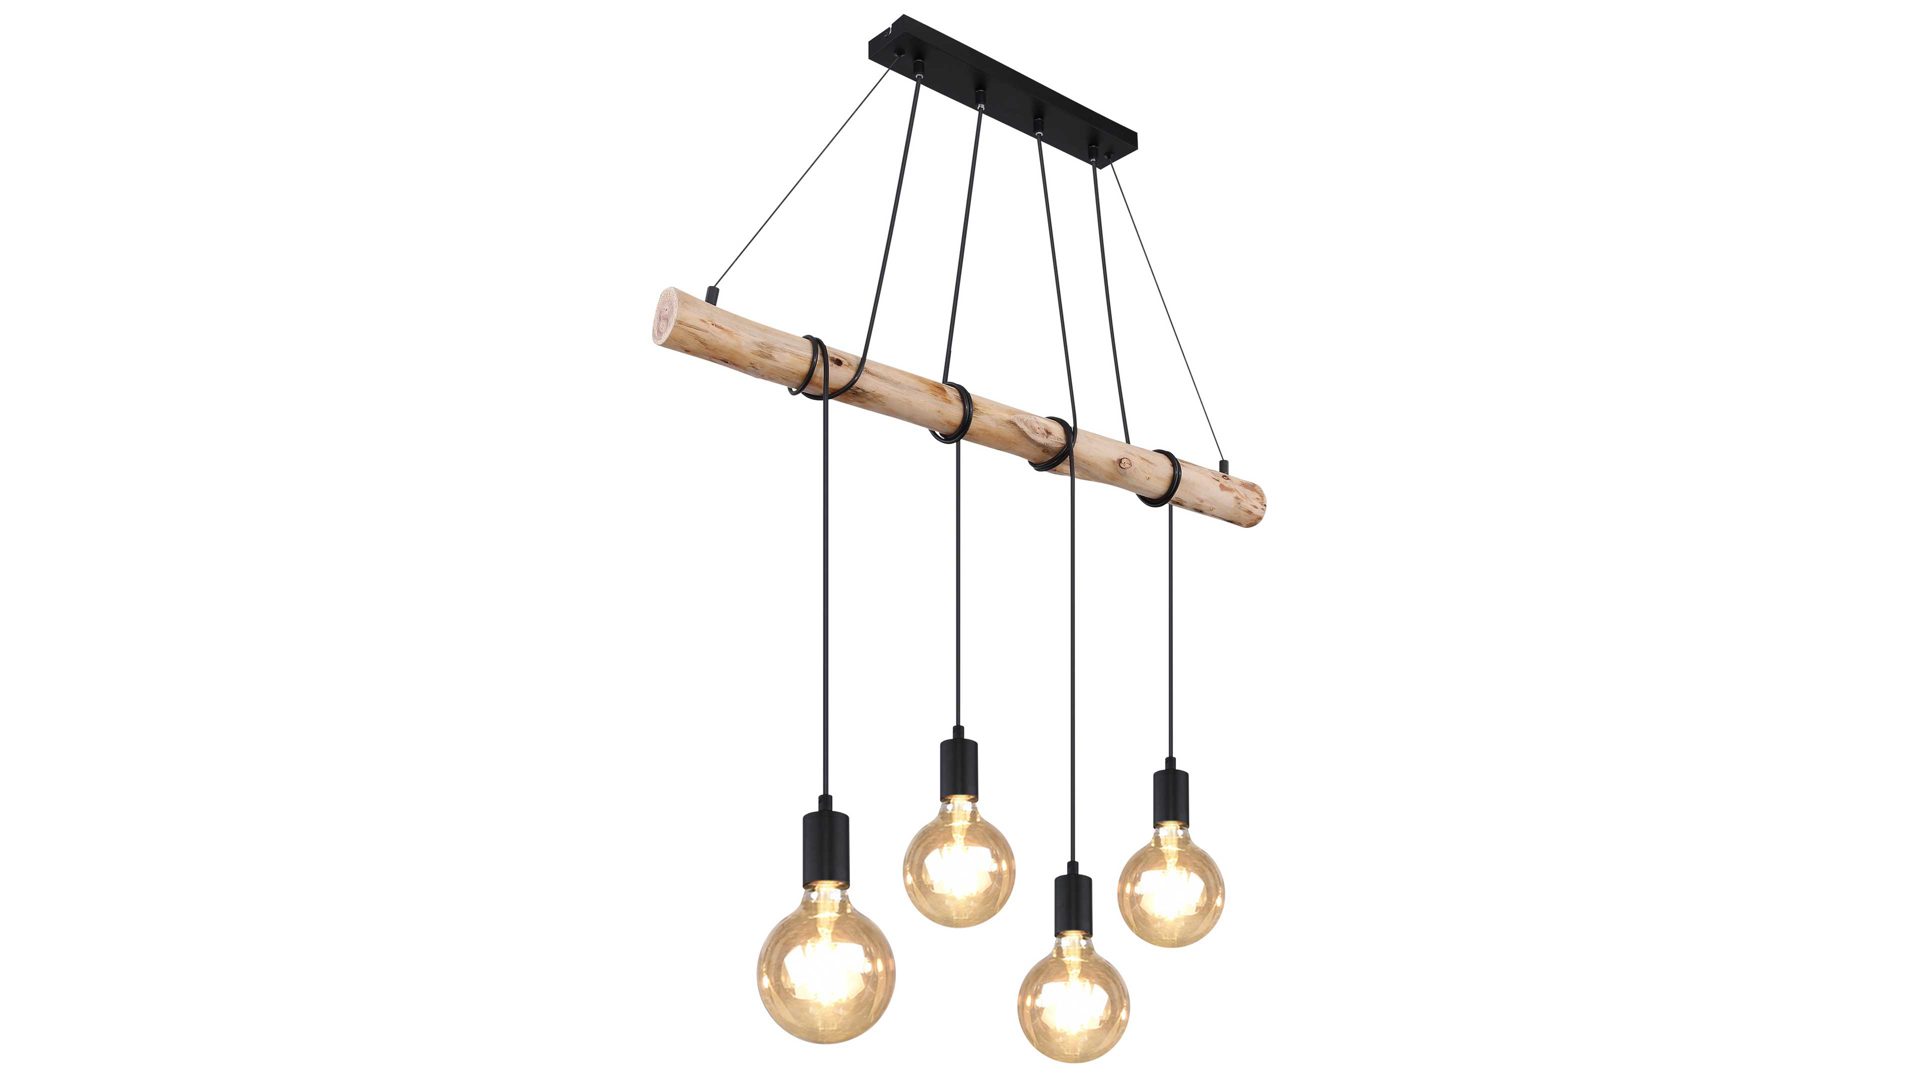 Pendelleuchte Globo lighting aus Holz in Holzfarben GLOBO Hängelampe Auston Holz & Metall – Länge ca. 90 cm